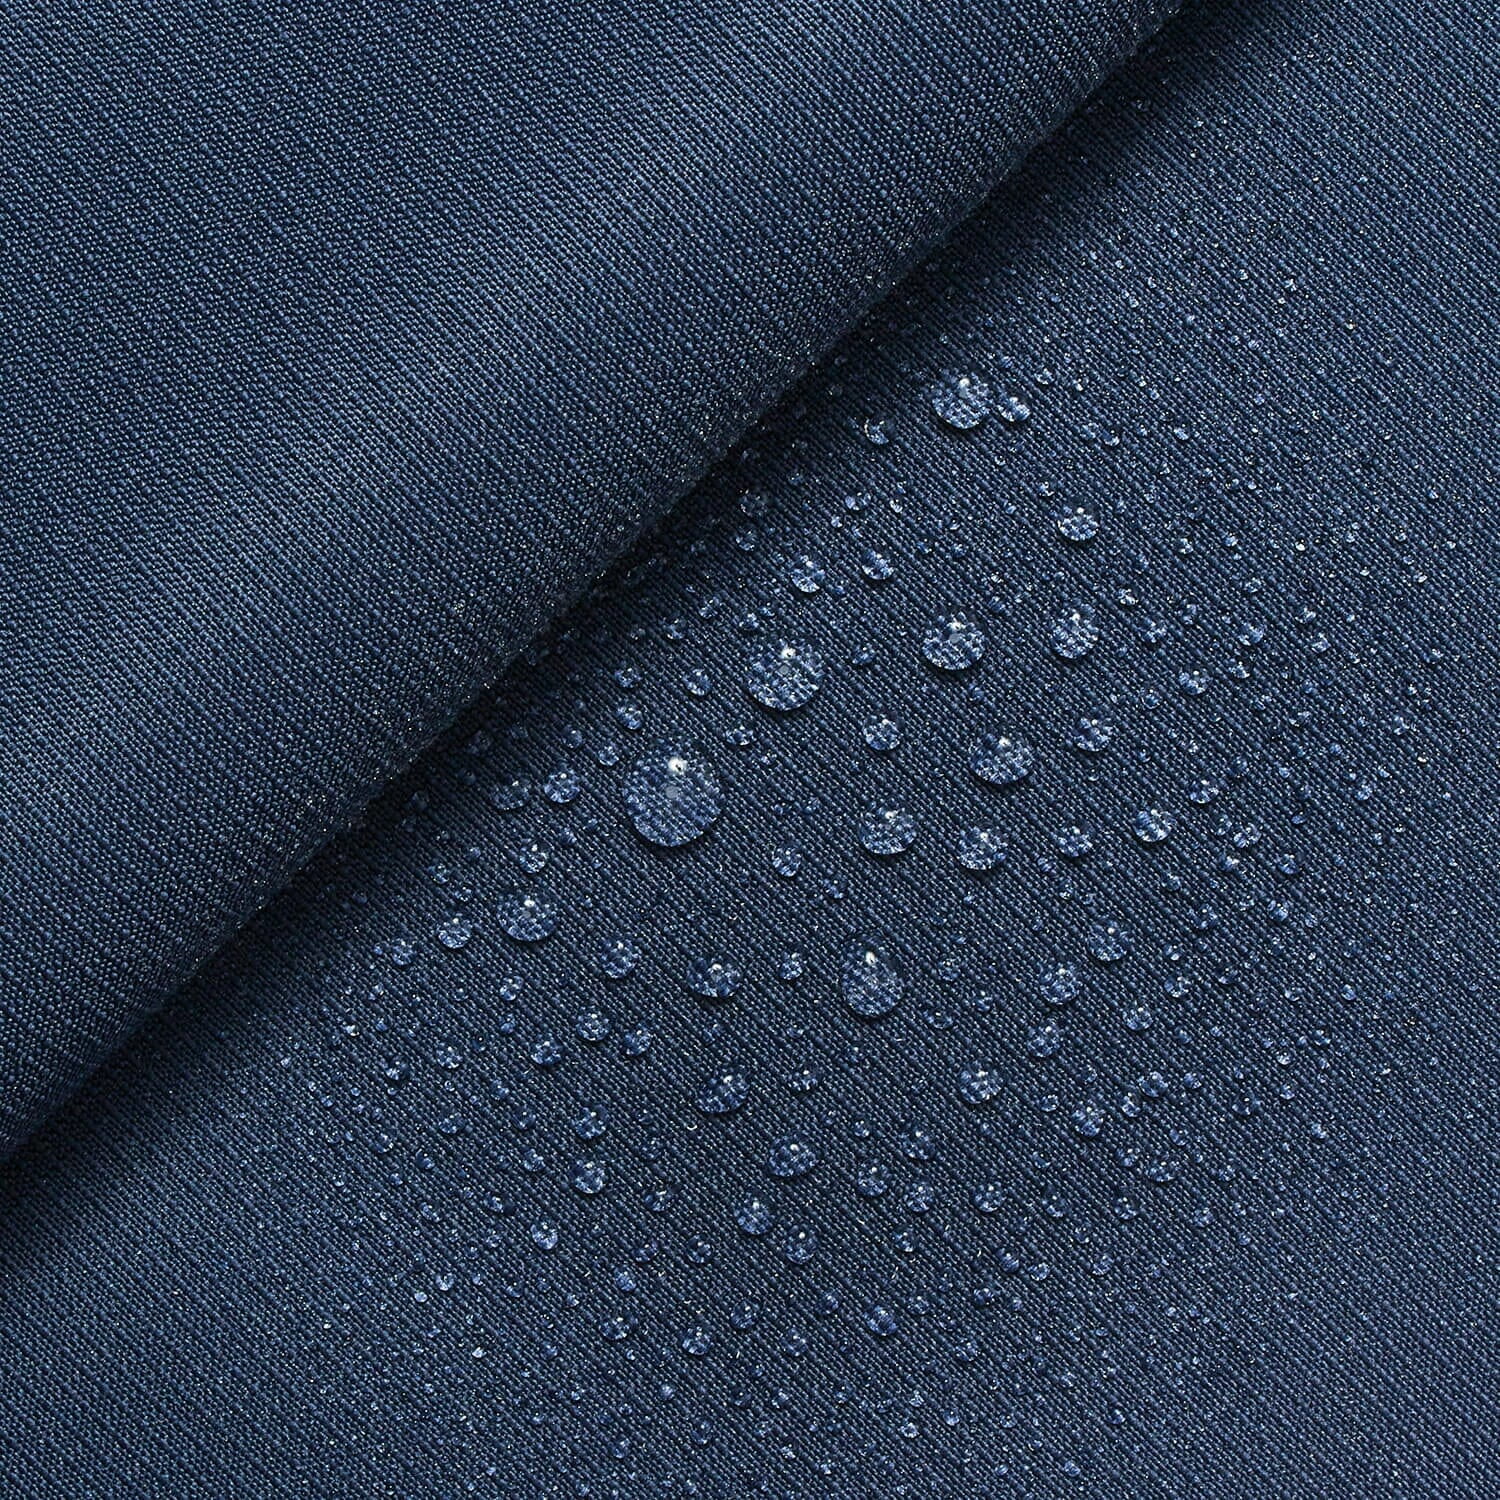 Polyester Ripstop Fabric (DWR) 110 Denier 2.6oz 58/60 Wide